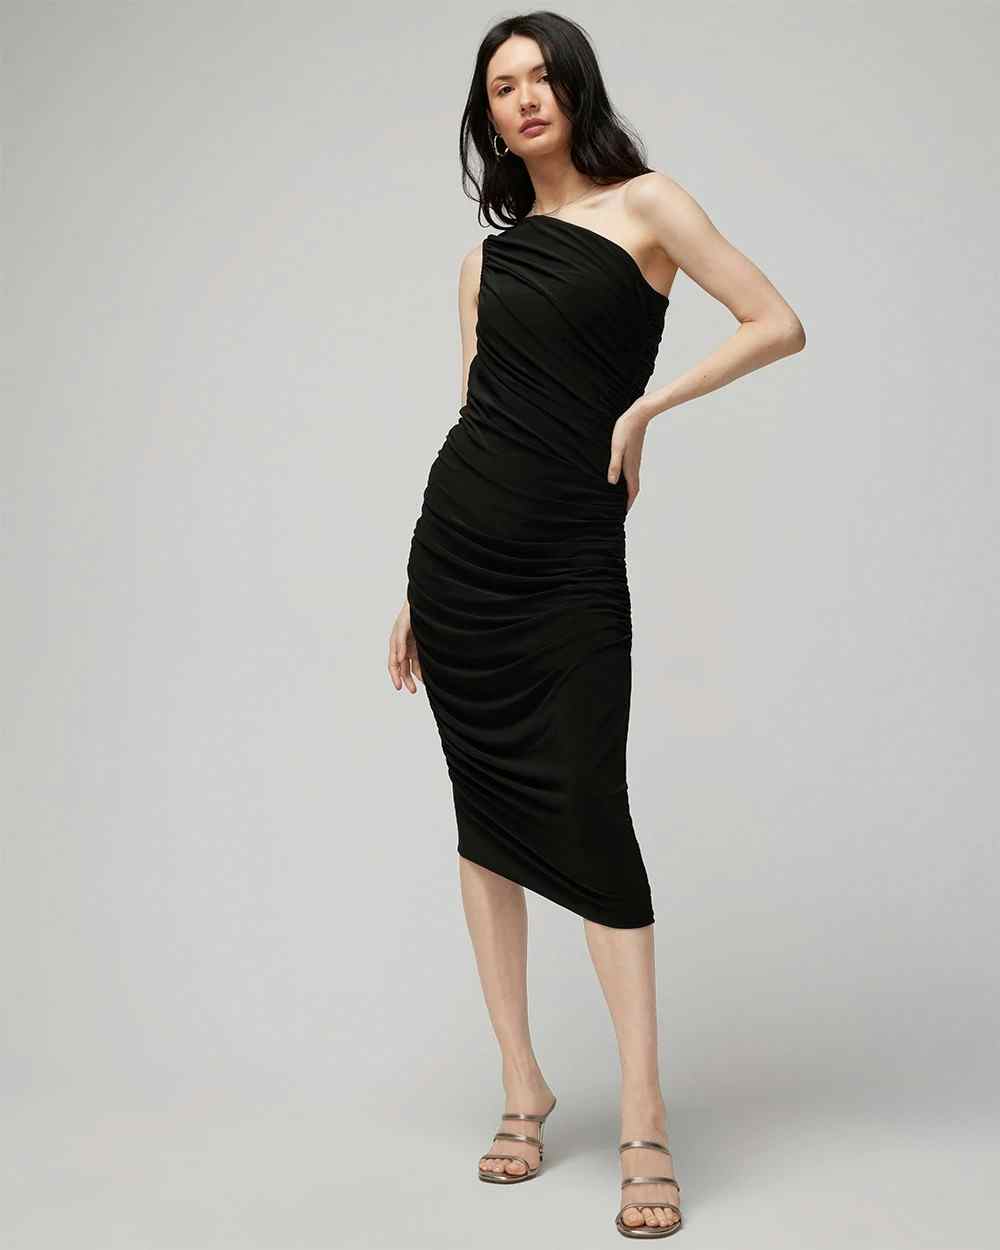 One-Shoulder Asymmetrical Dress | White House Black Market